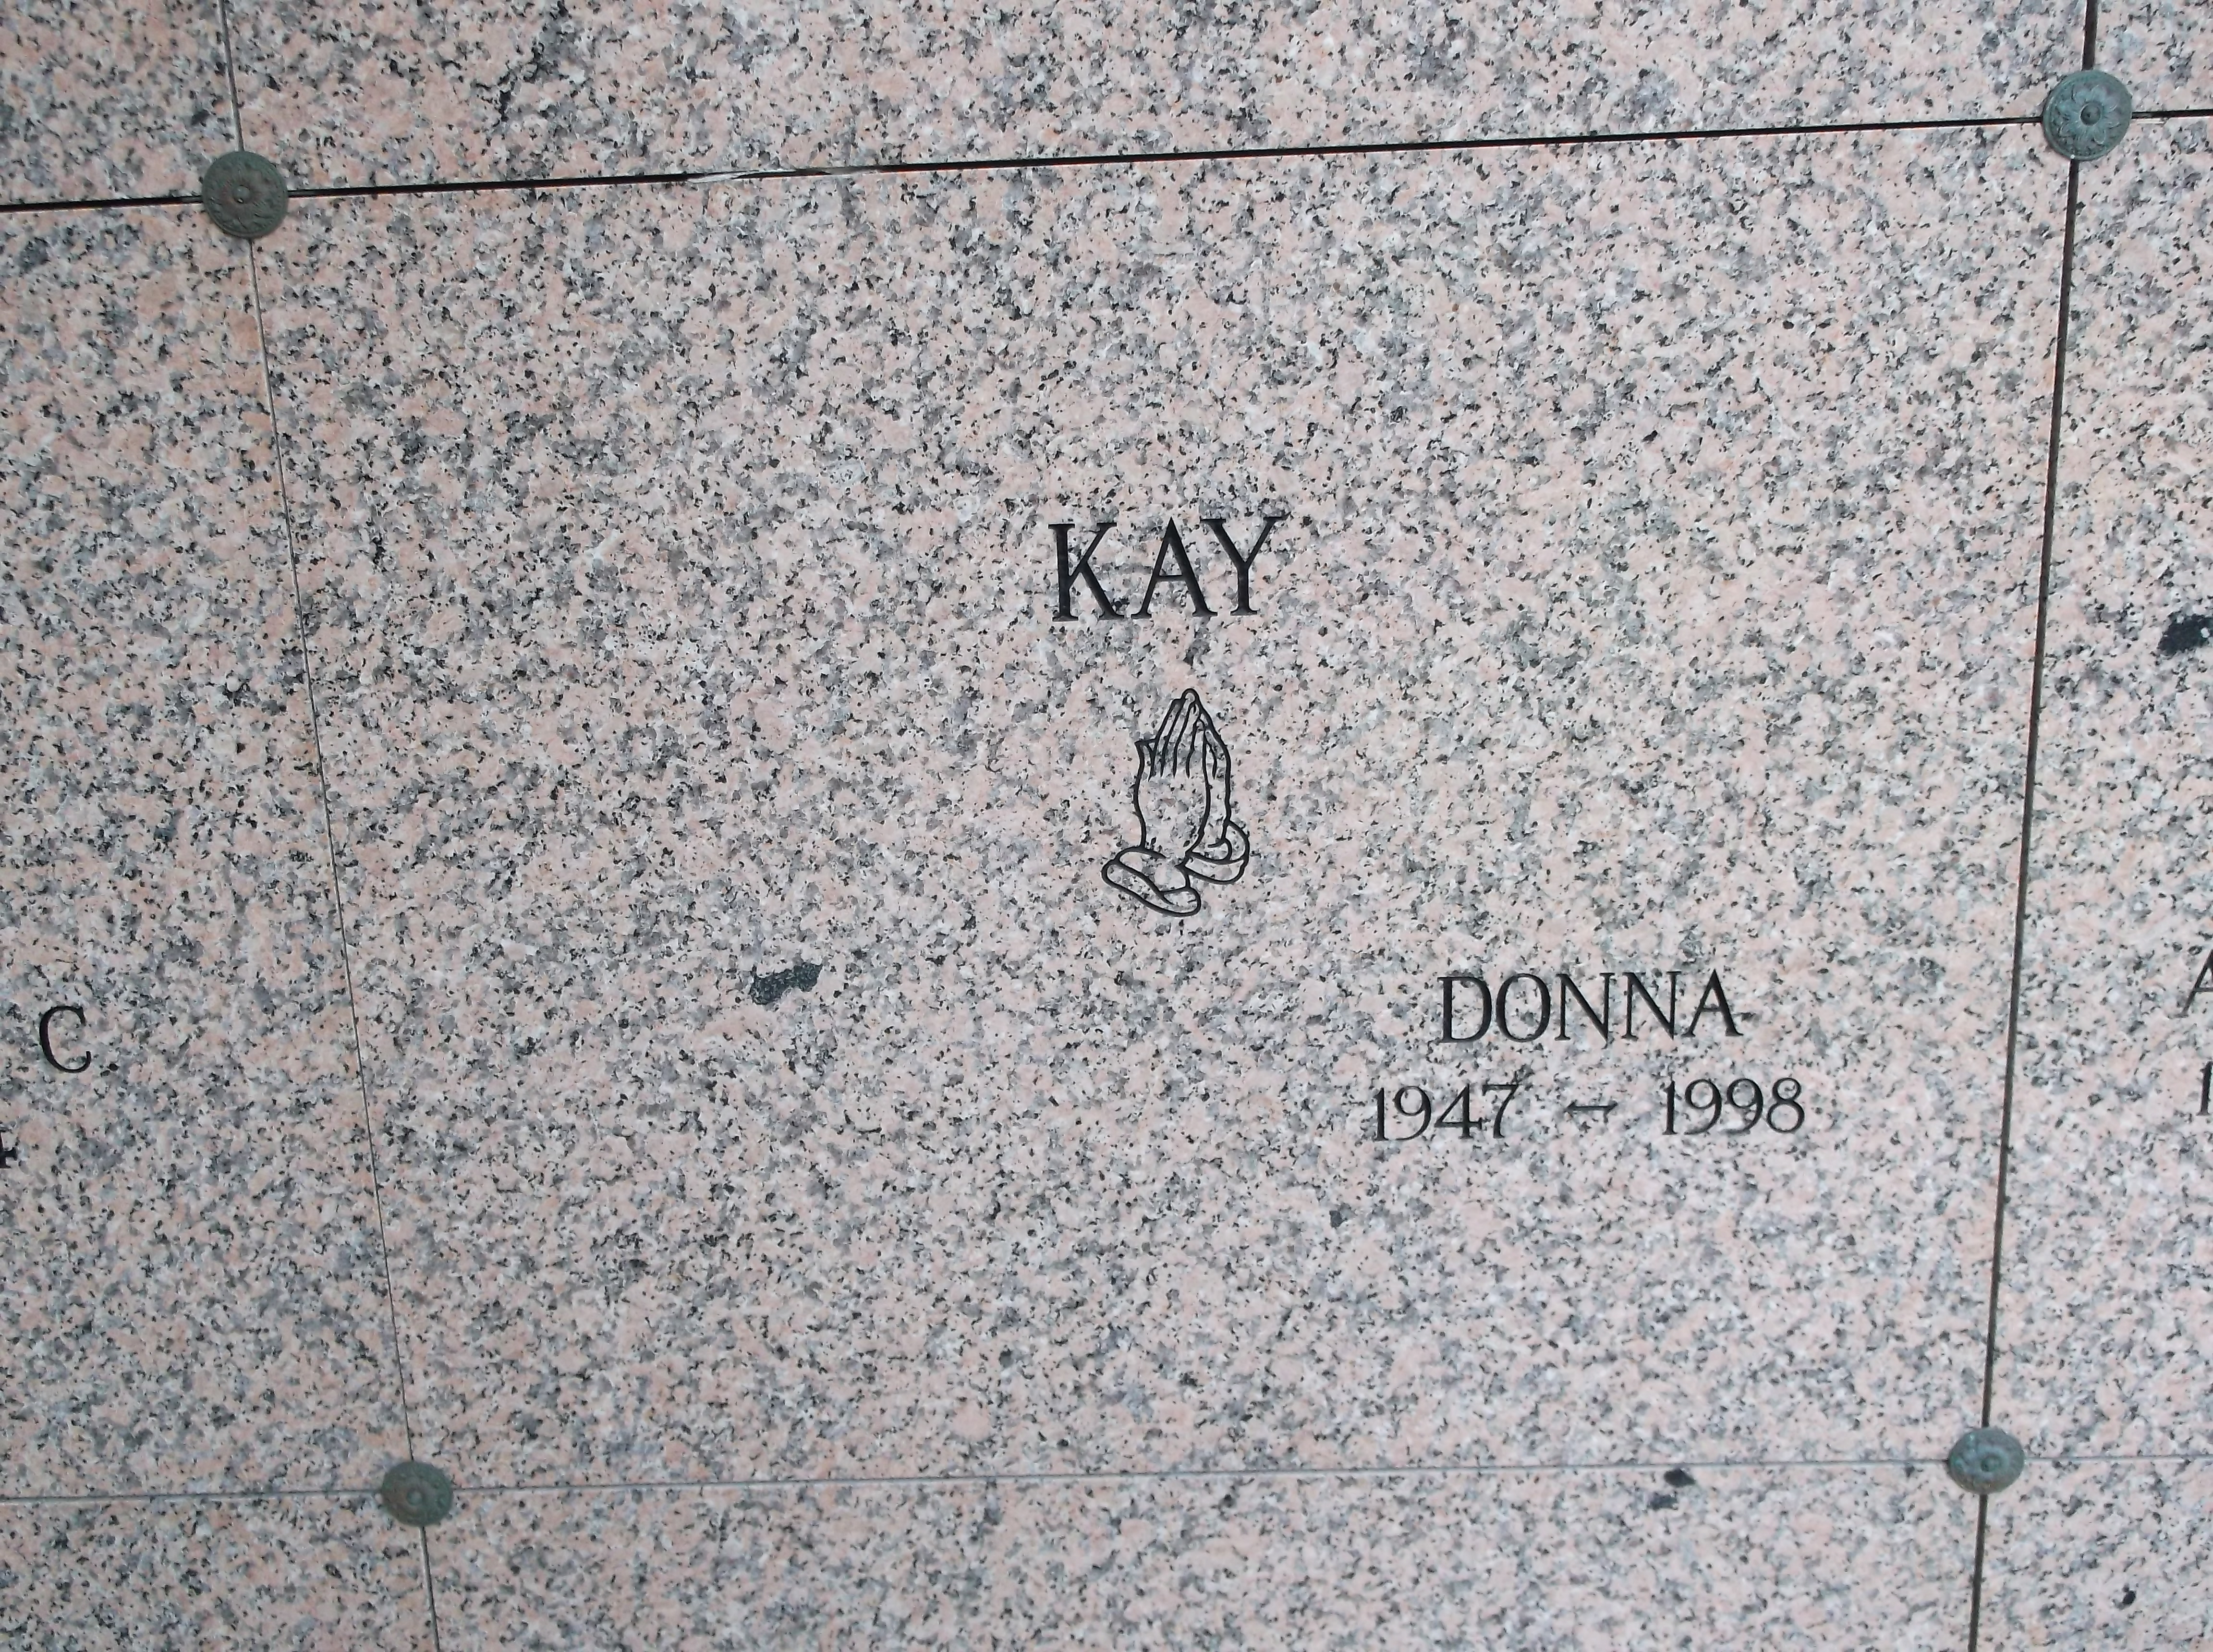 Donna Kay